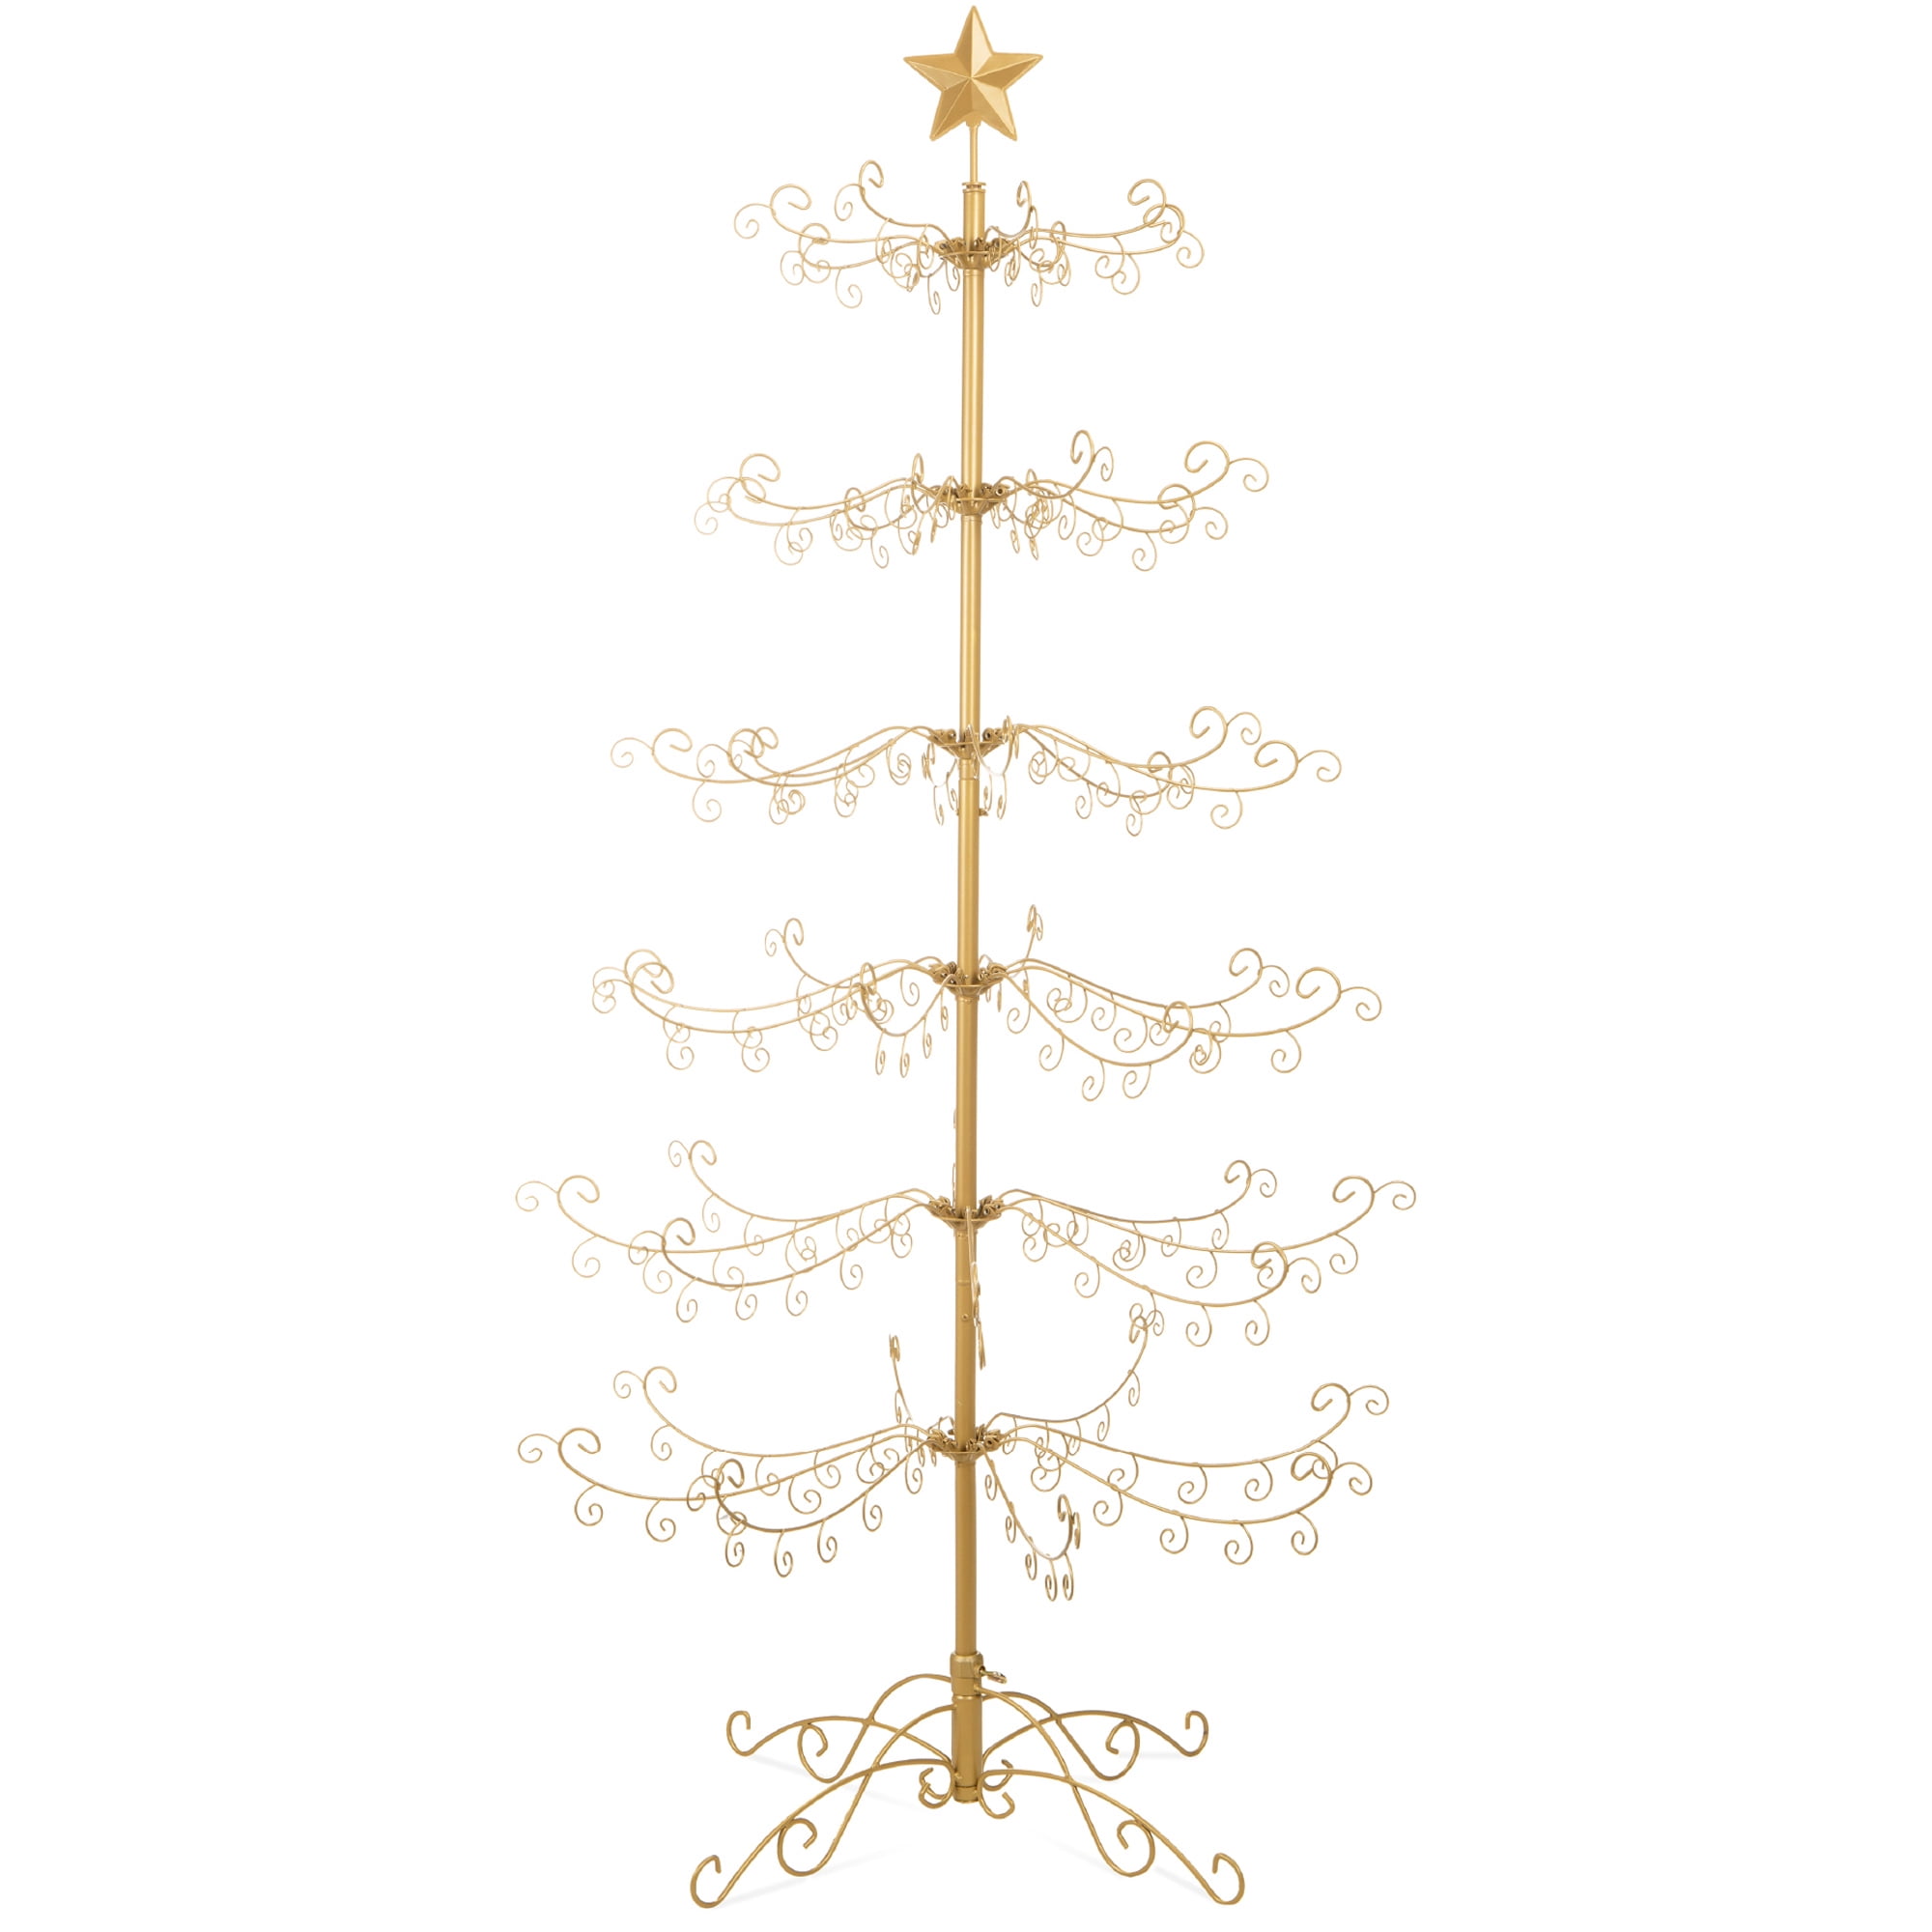 Christmas Metal Ornament Display Tree Stand 3-Tier Branches Holiday Season Decor